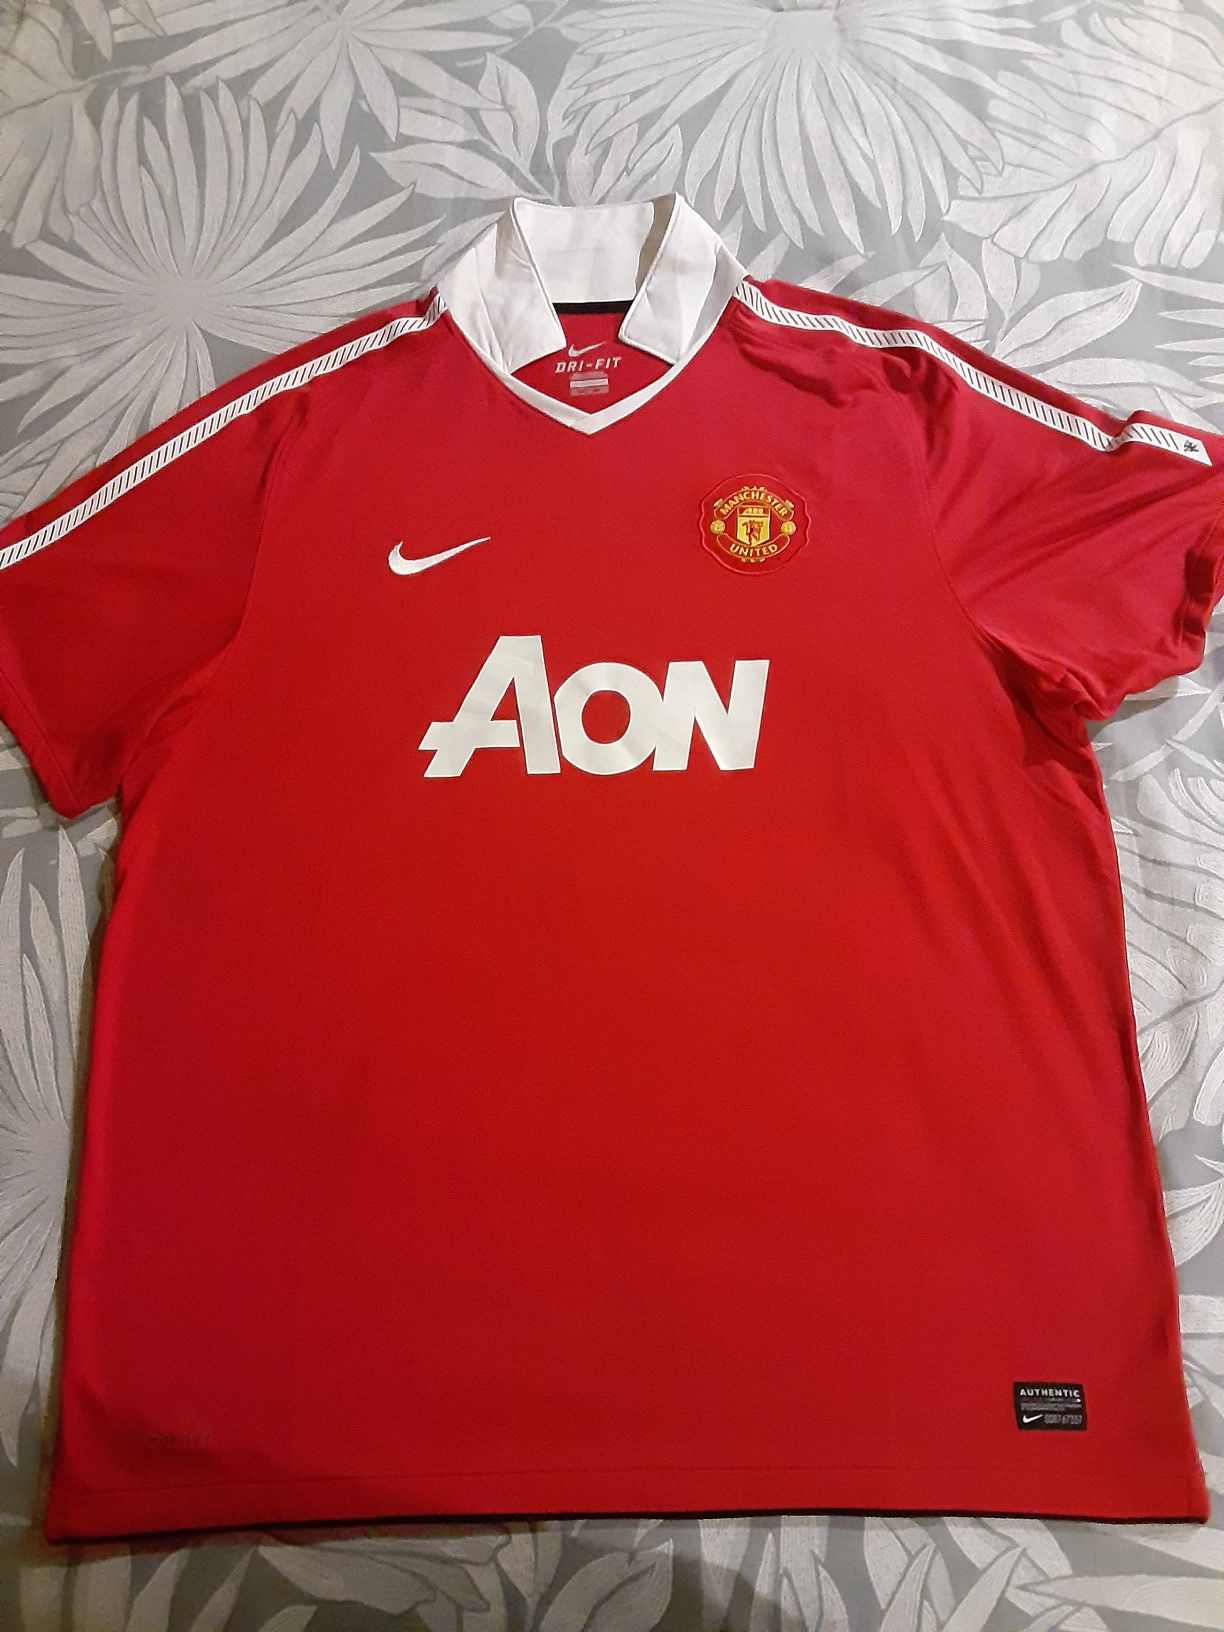 Manchester United Jersey like new sizes xxL